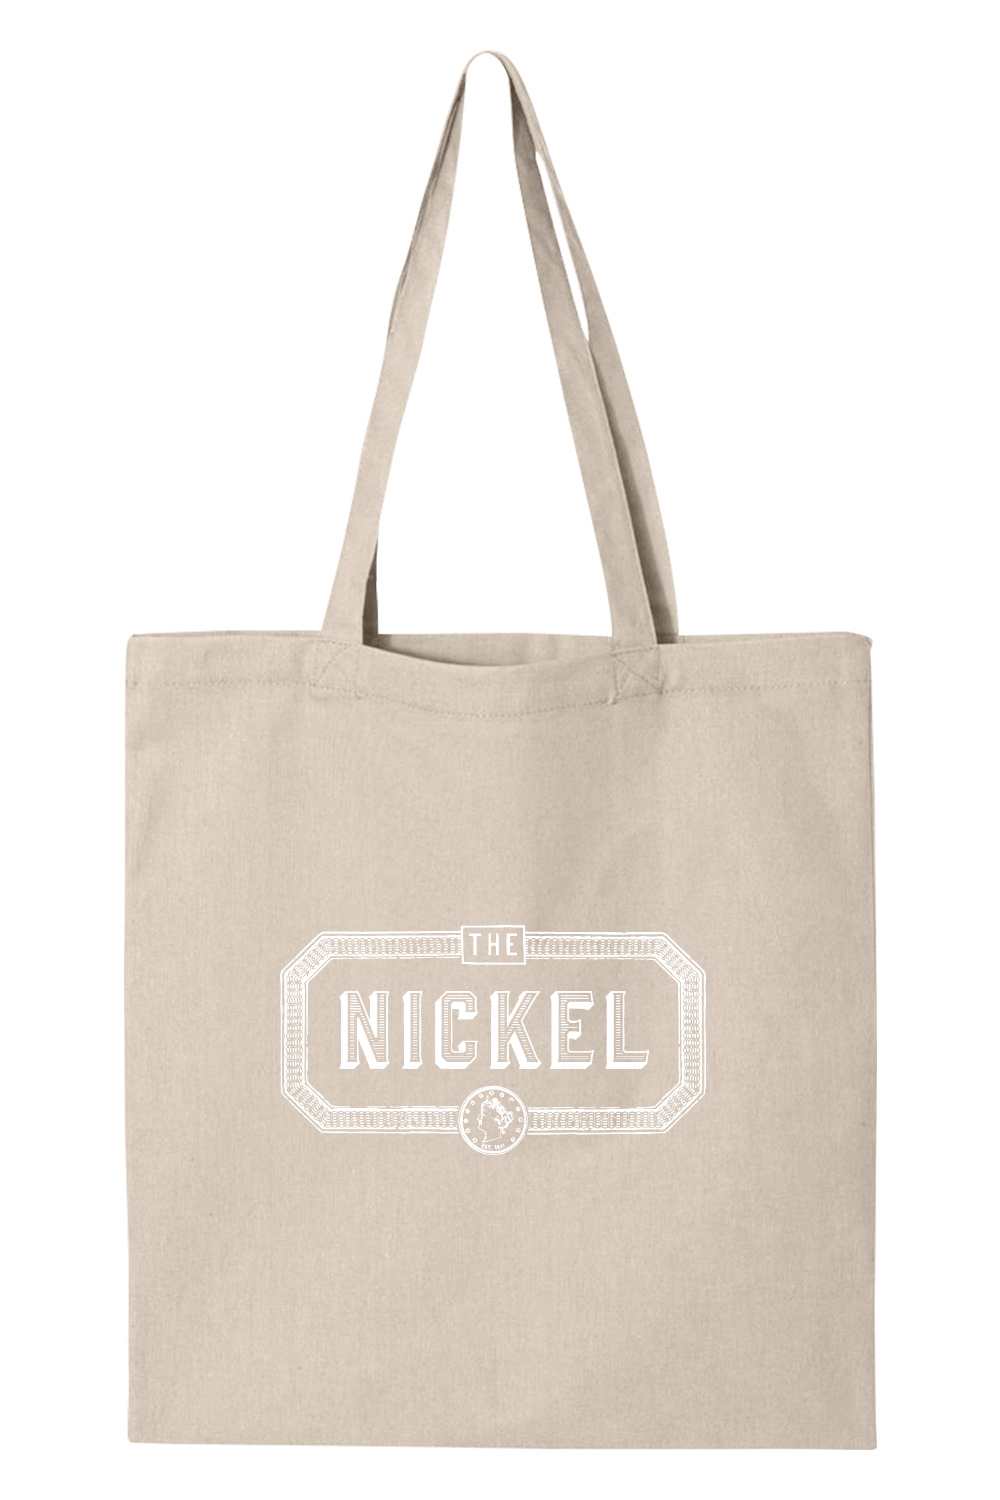 The Nickel - Tote bag